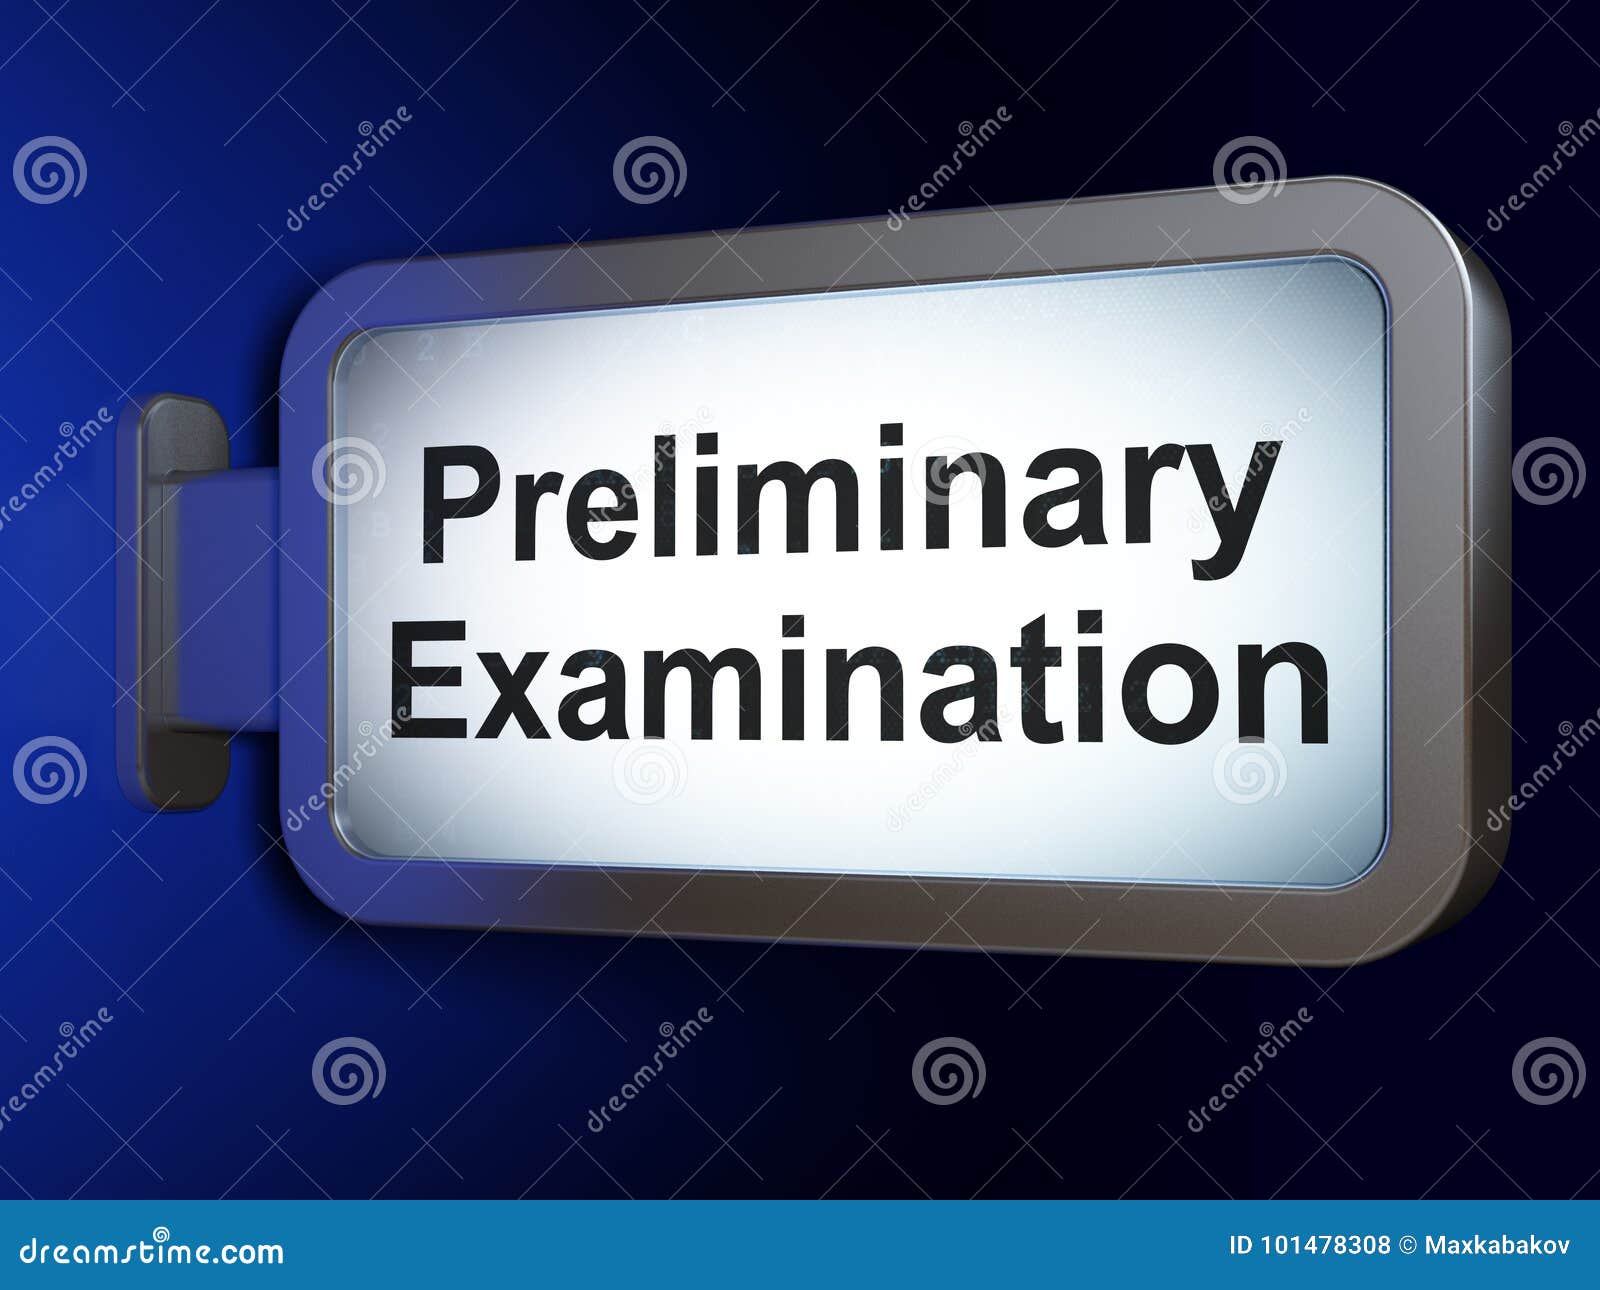 education concept: preliminary examination on billboard background